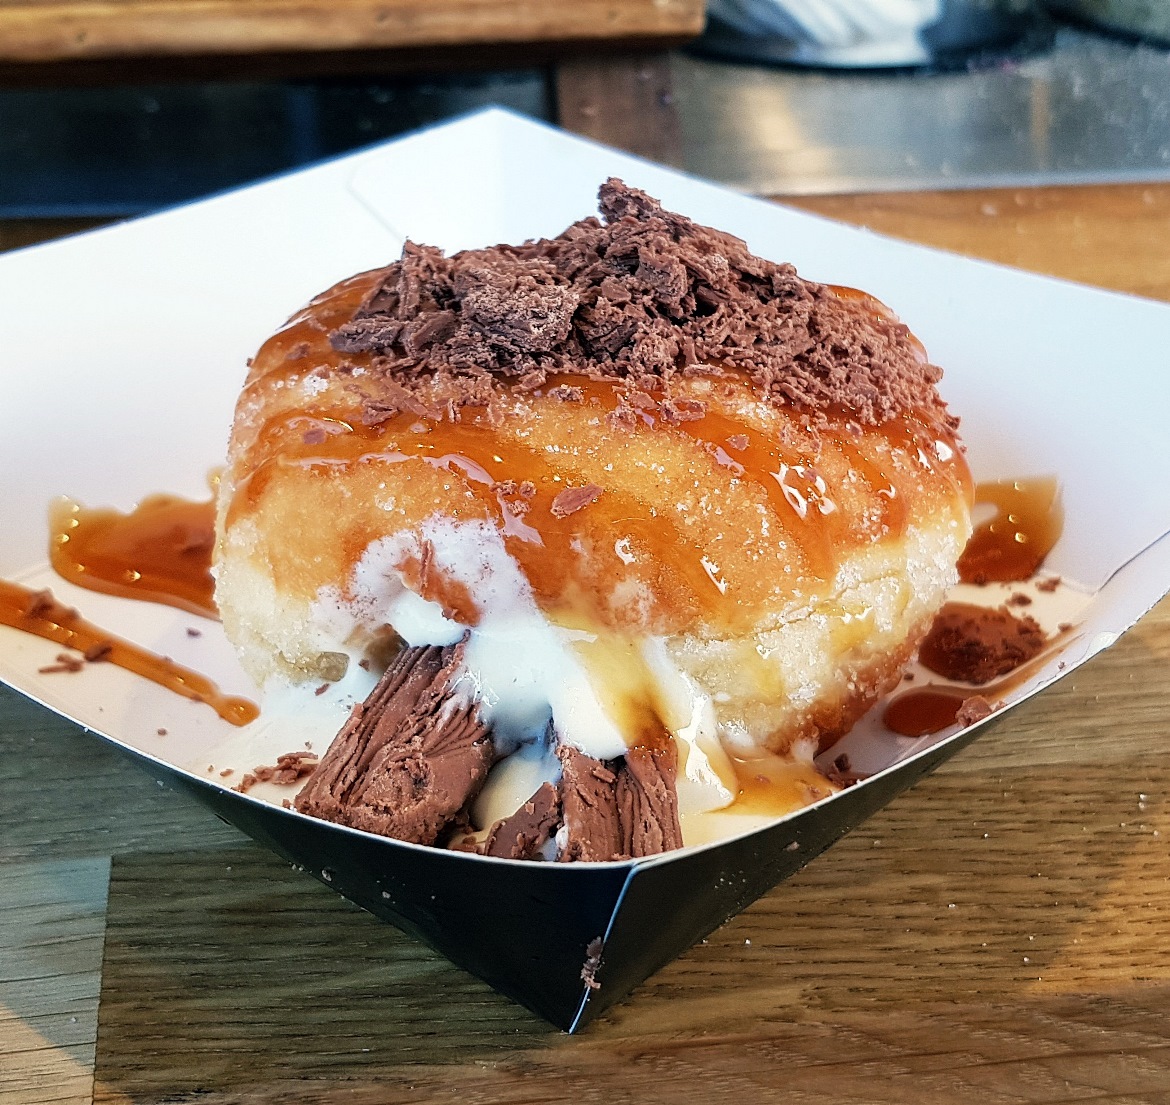 Dohhut doughnut at Leeds Food and Drink Festival - June 2018 Monthly Recap by BeckyBecky Blogs